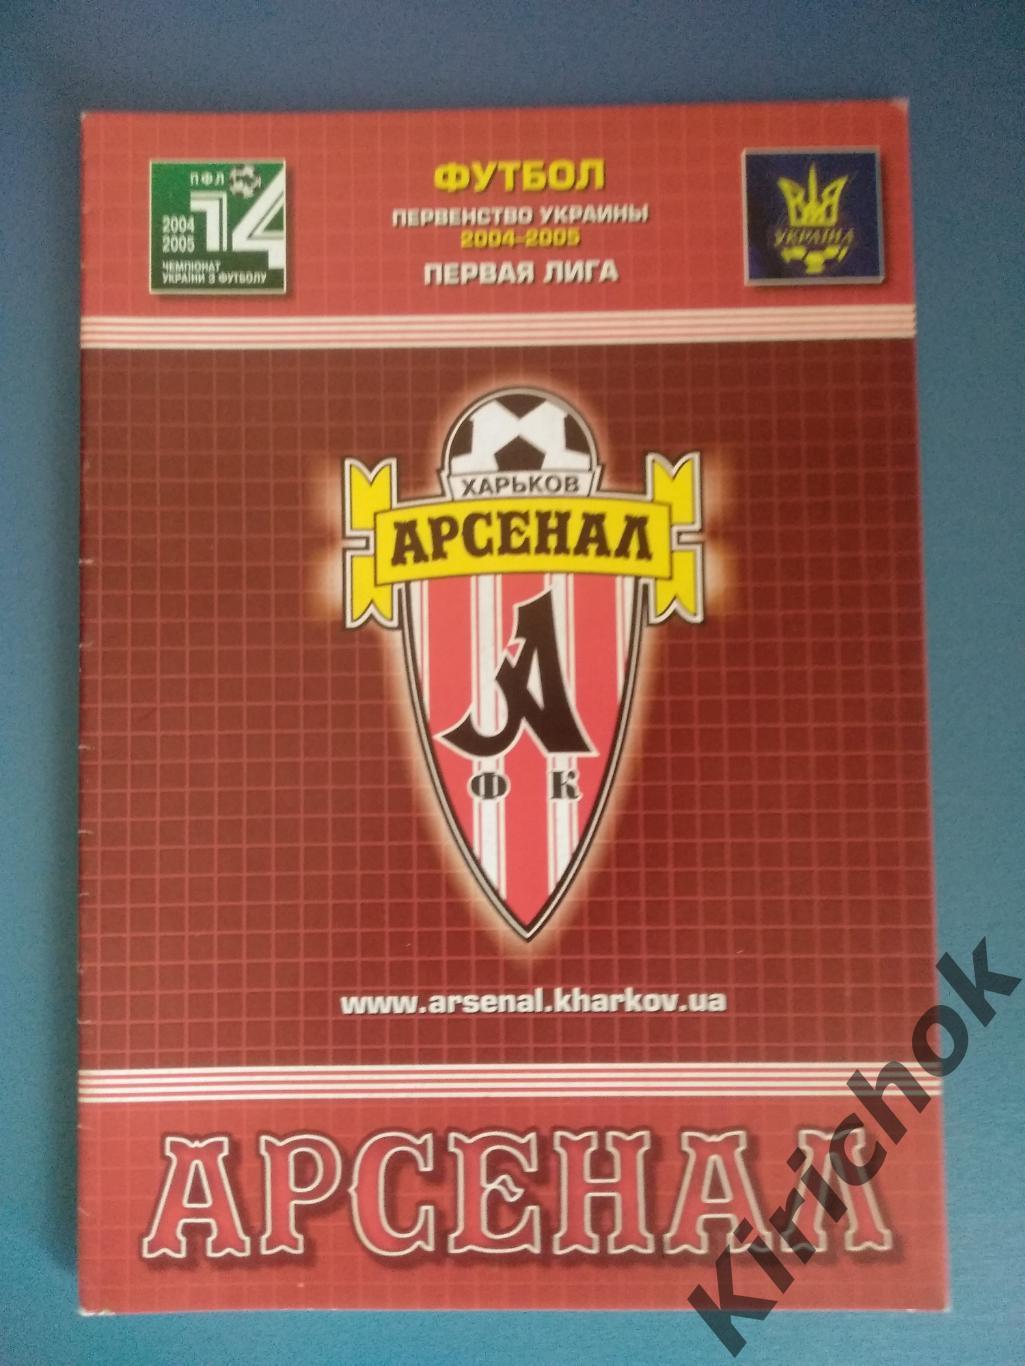 Арсенал Харьков - Шахтер - 2 Донецк 2004/2005